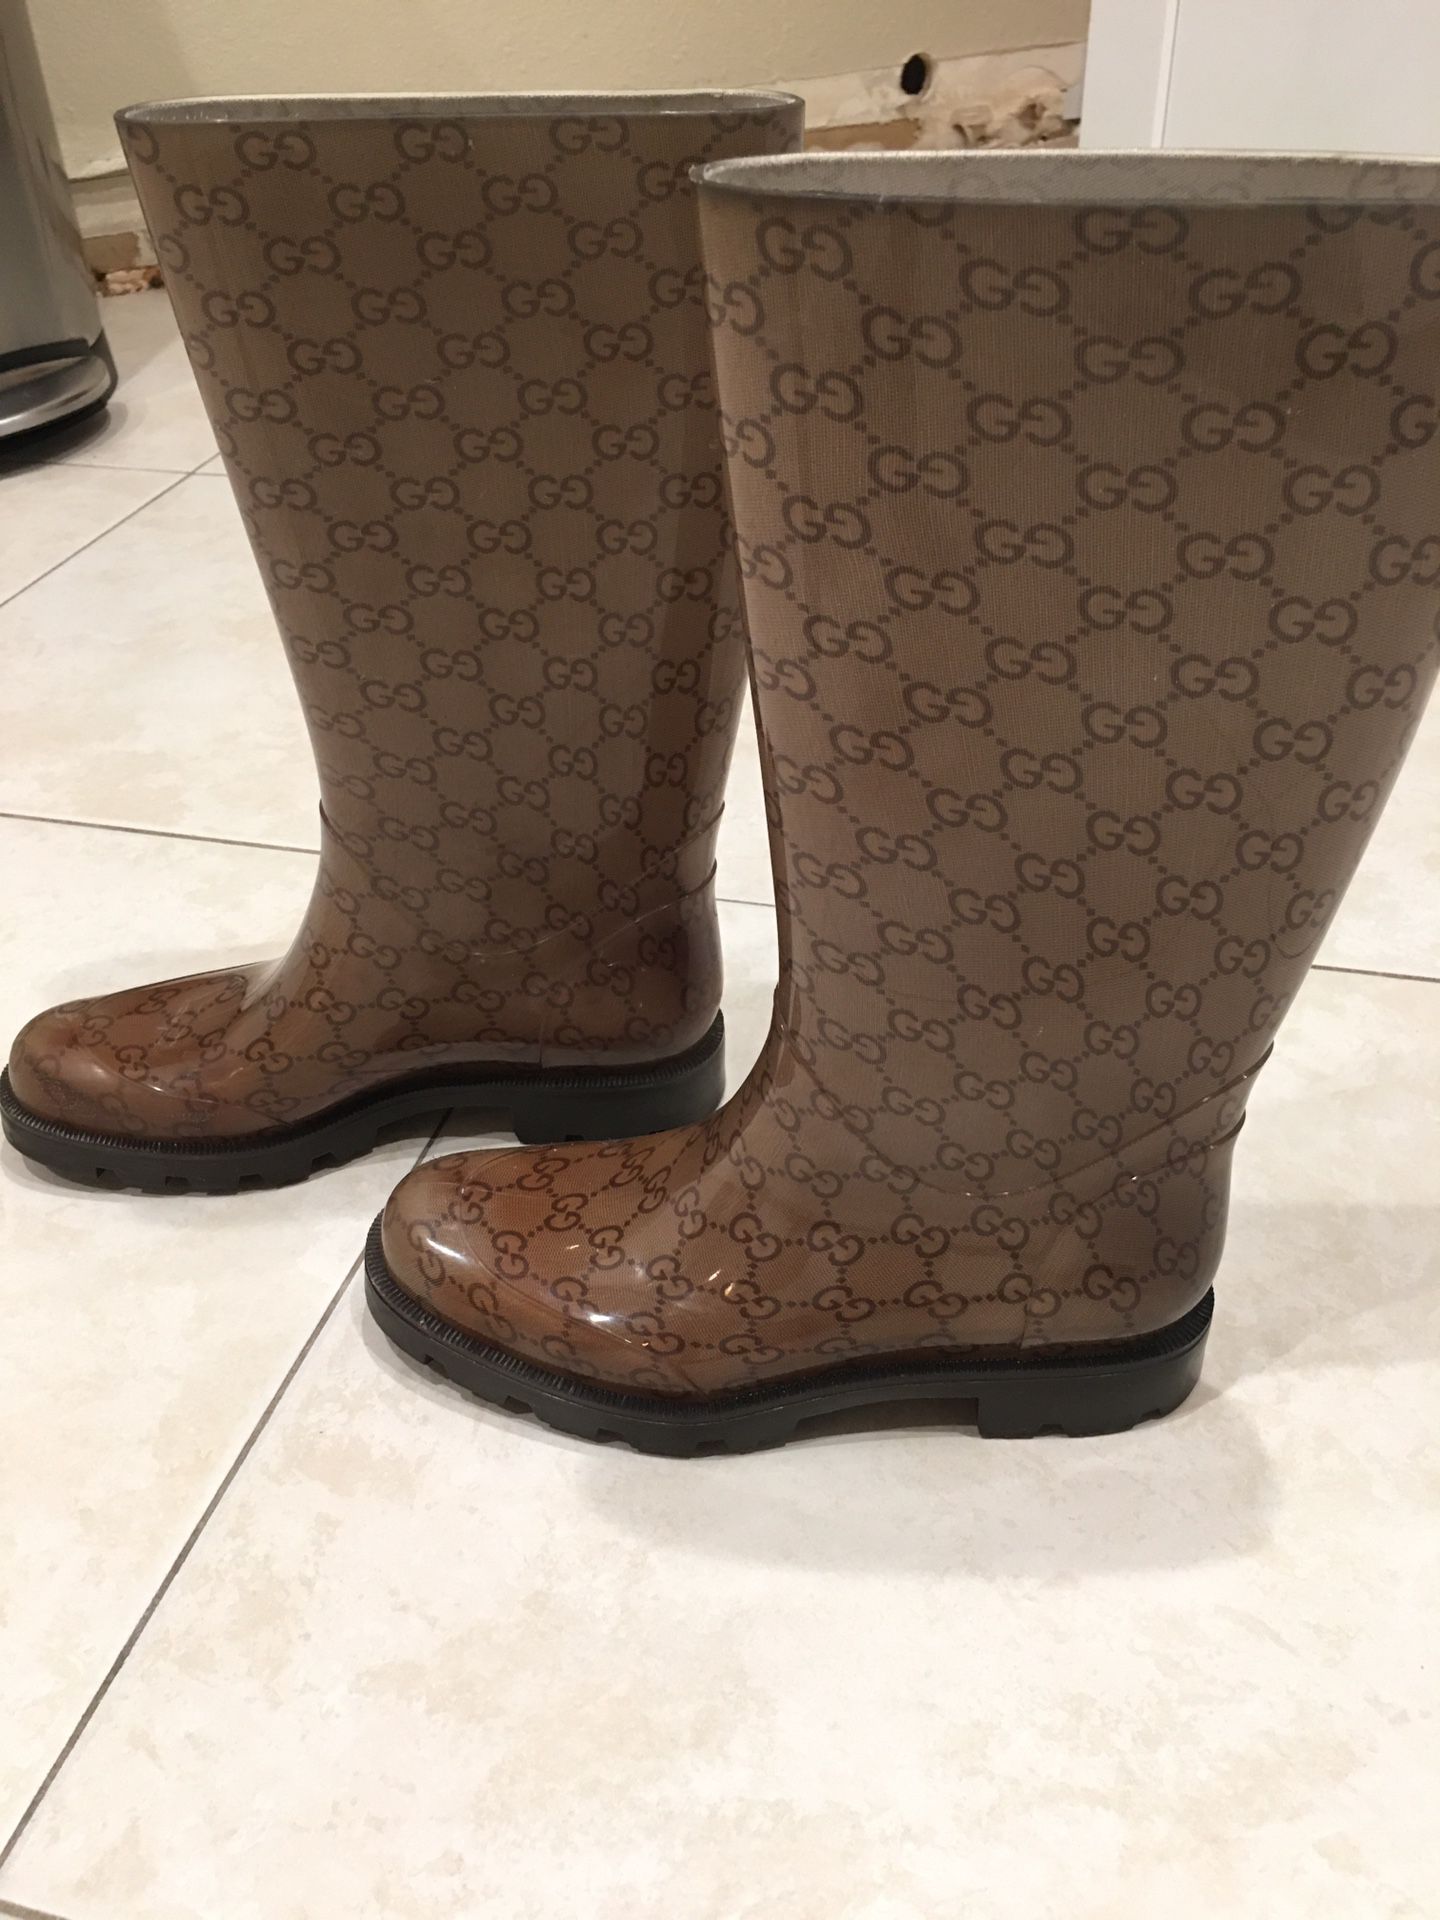 Authentic Gucci Rain Boots Size 6.5